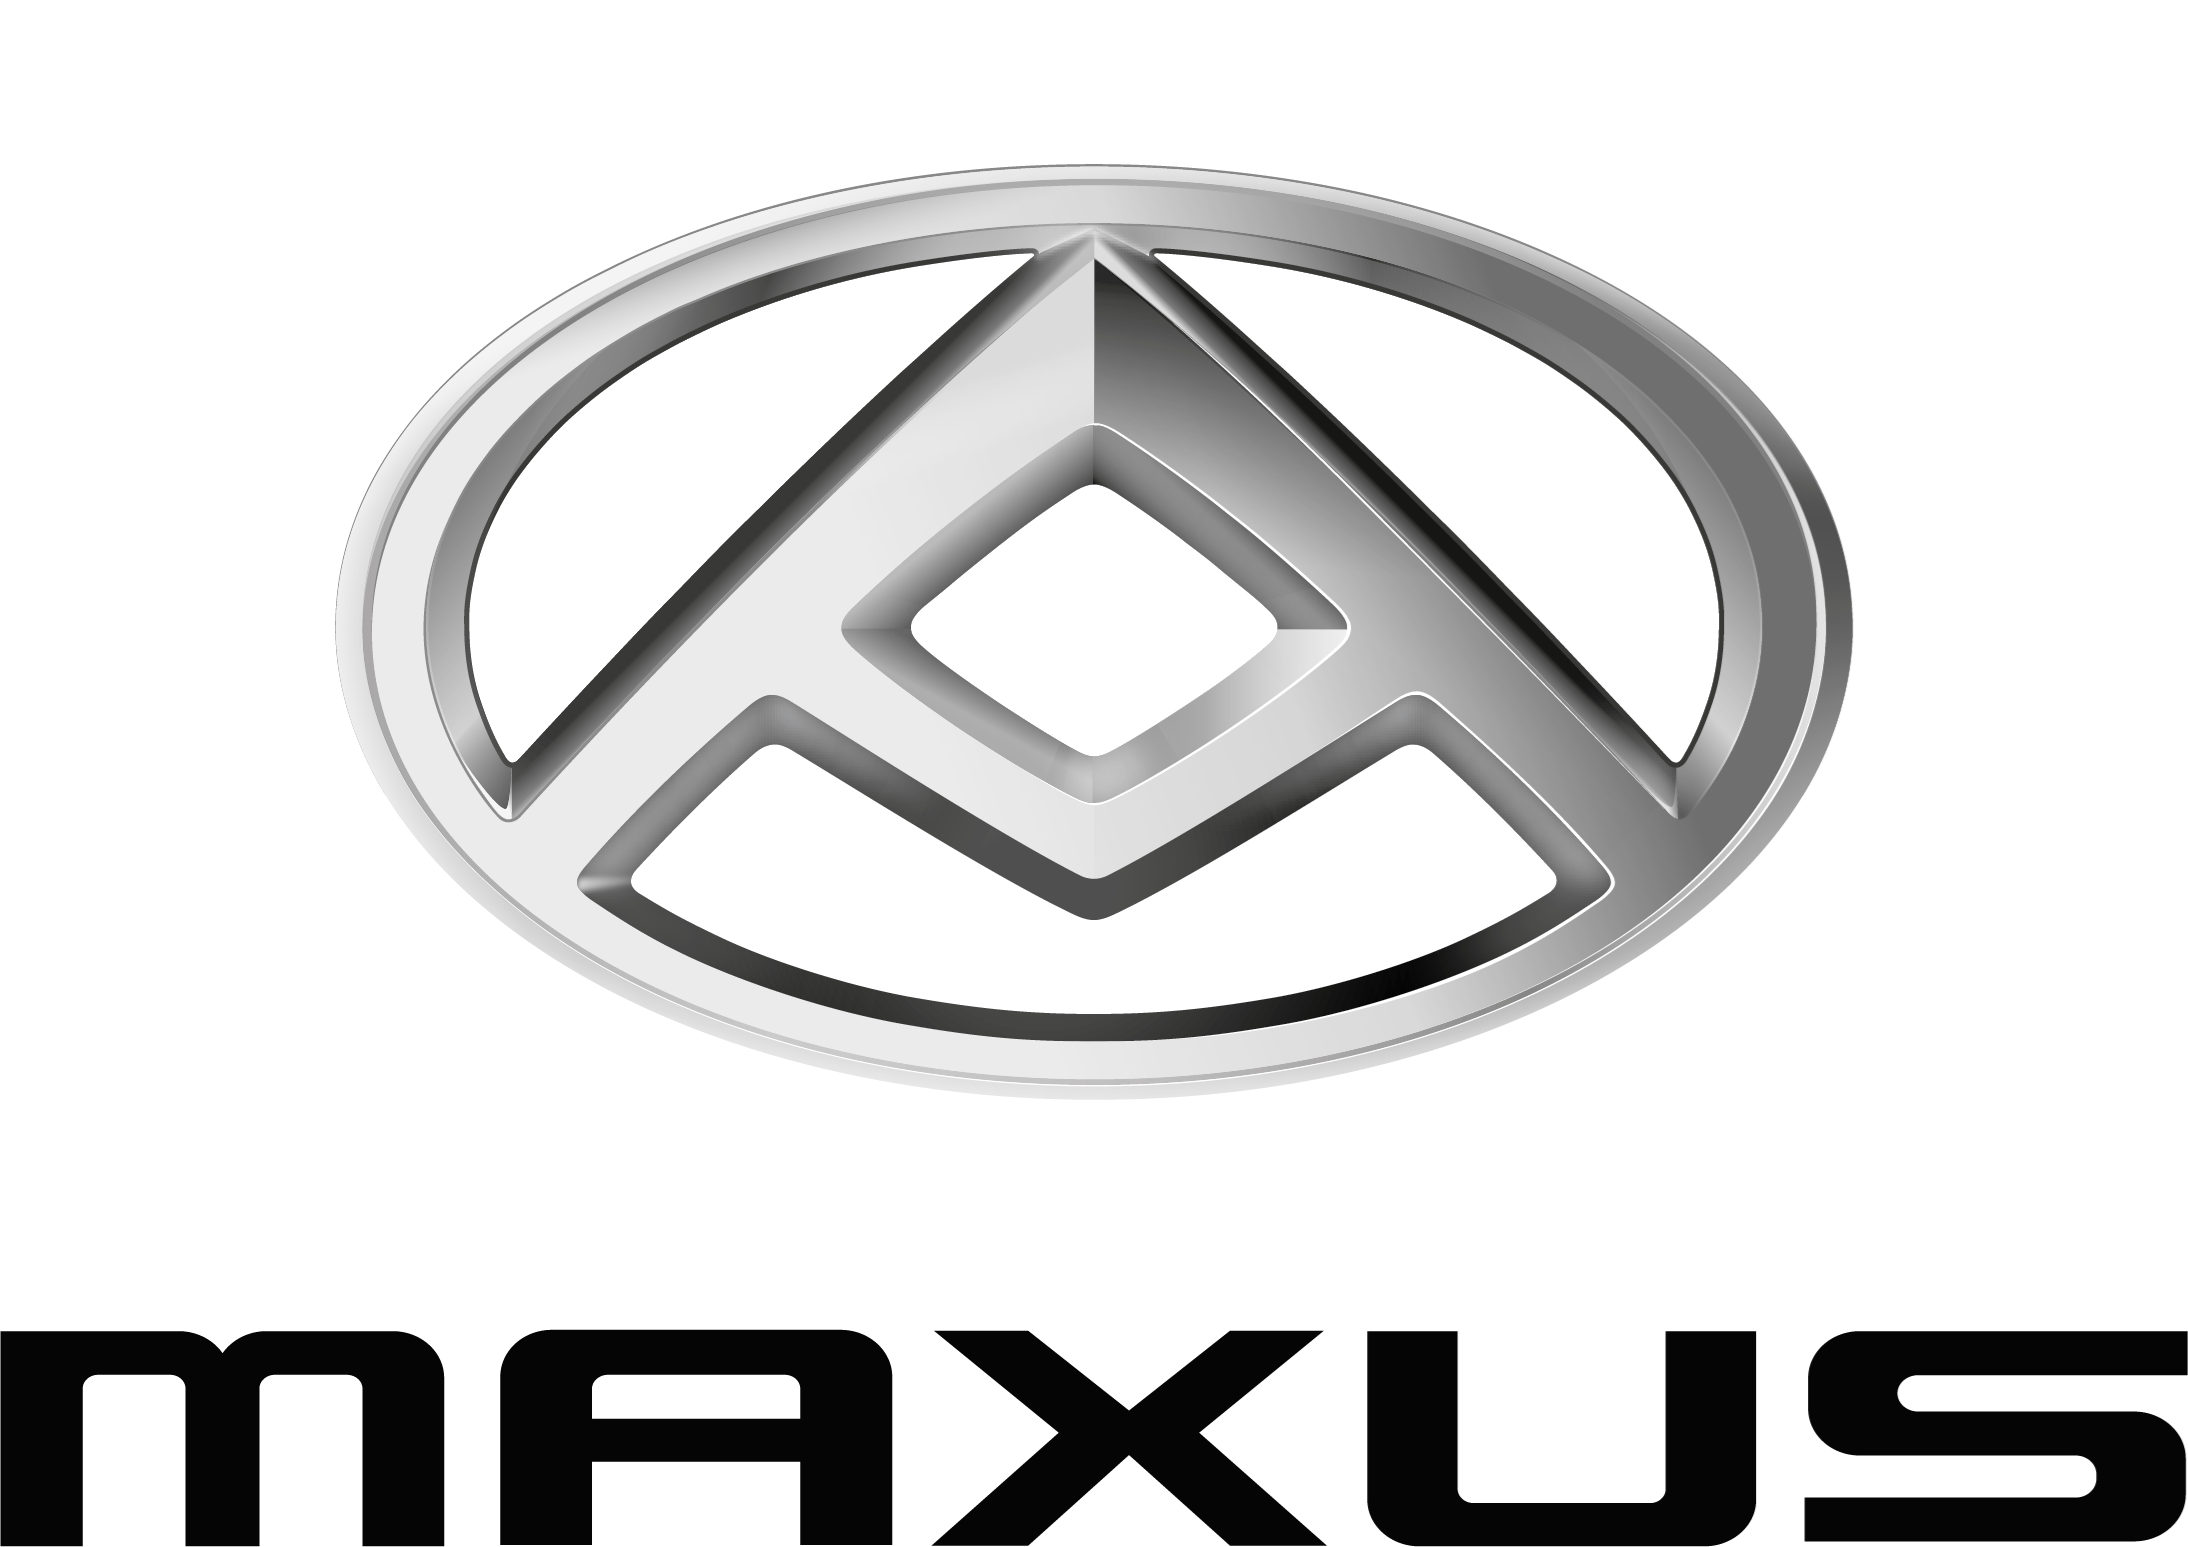 maxus logo